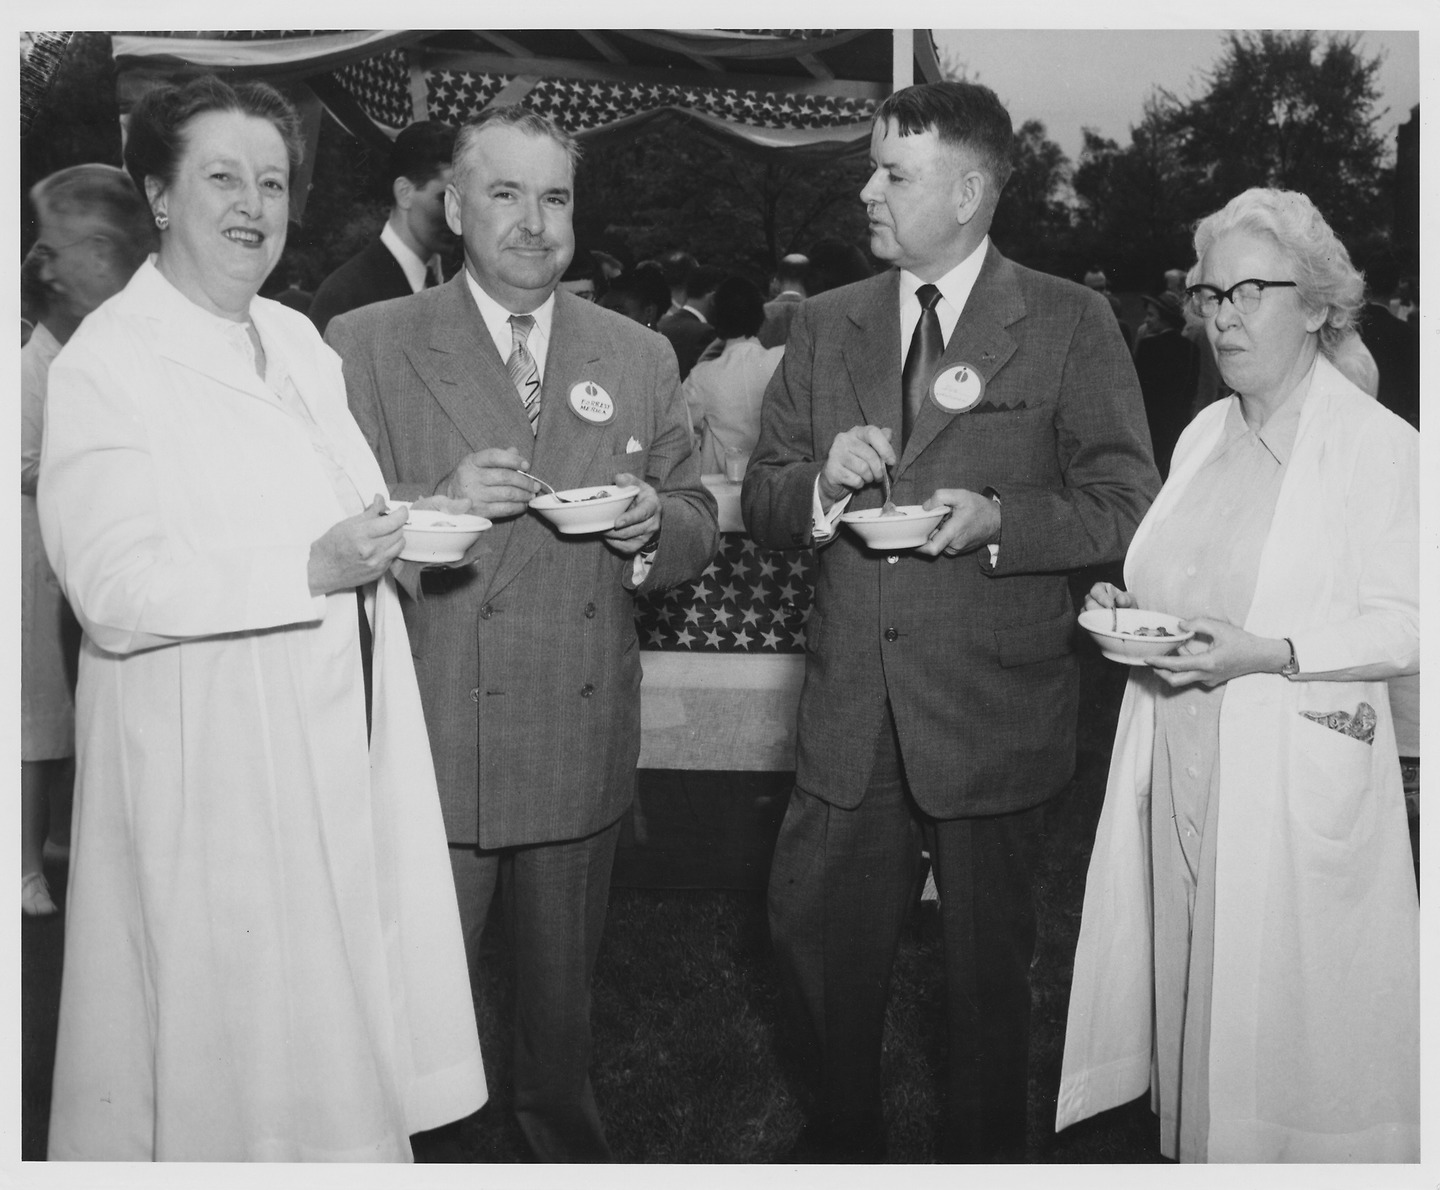 four alumni share strawberry shortcake outside in a historic black and white photo